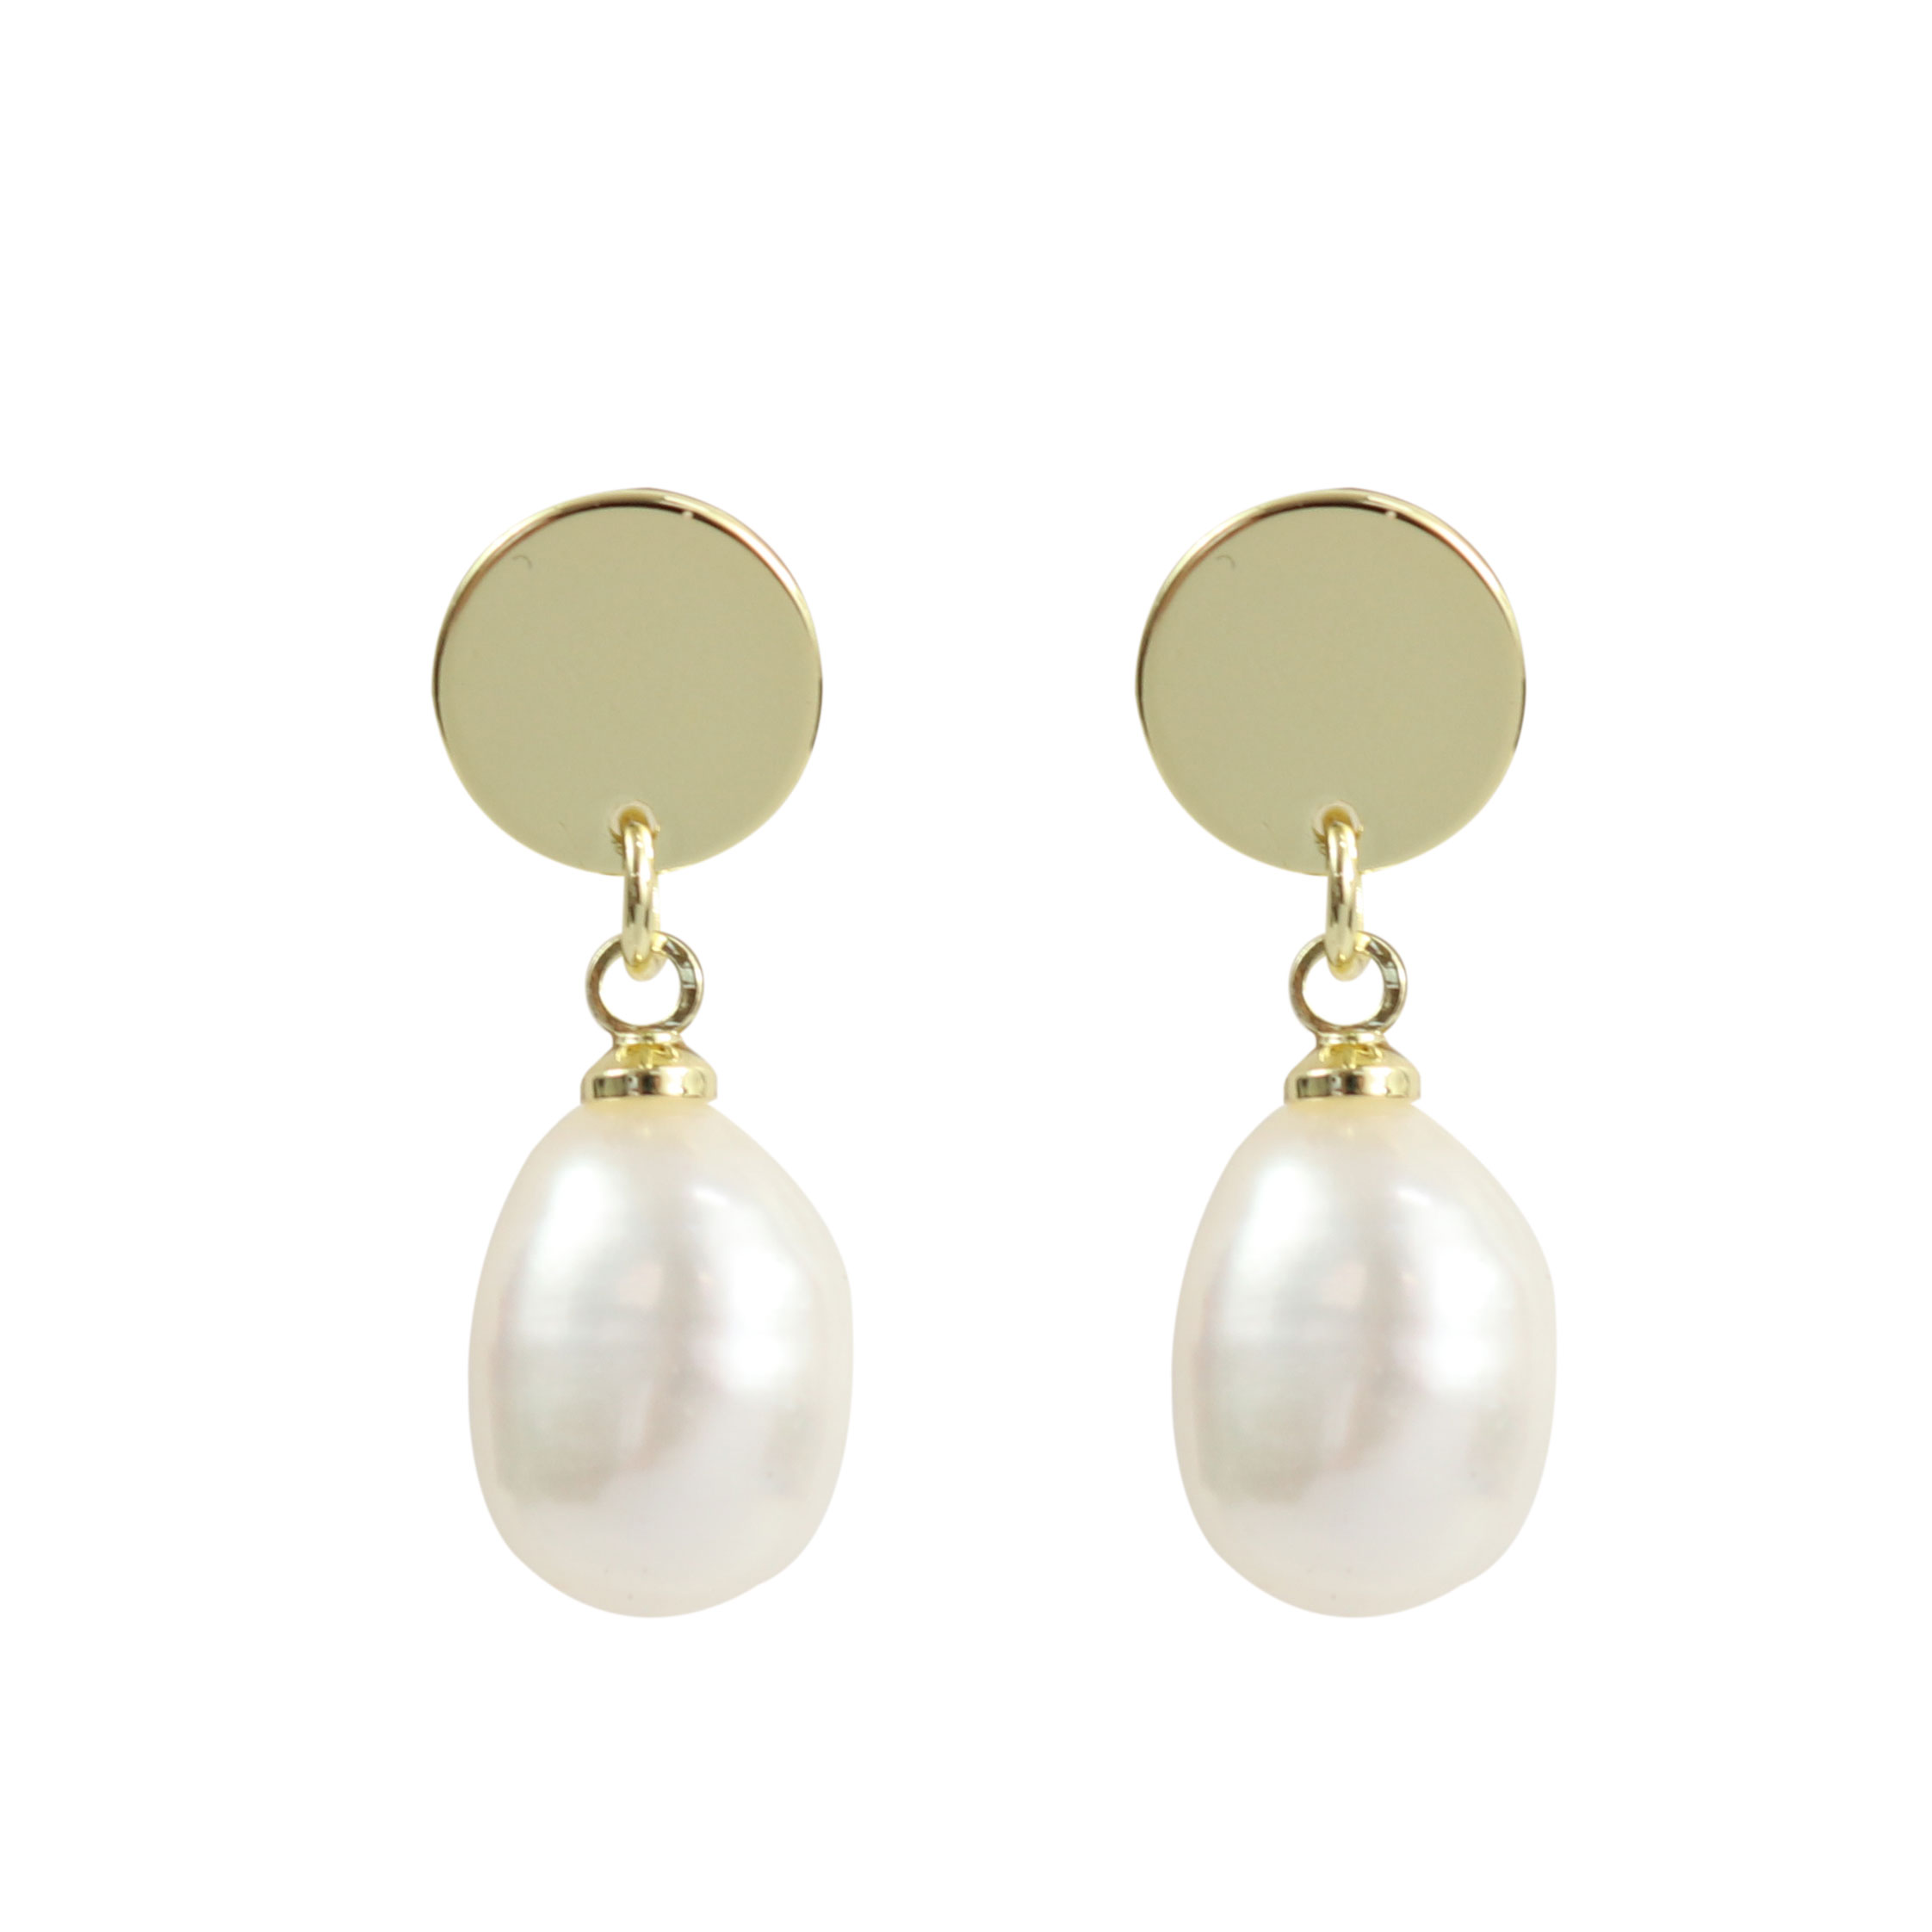 Gold pearl drop earrings - Wicked Sista | Cosmetic Bags, Jewellery ...